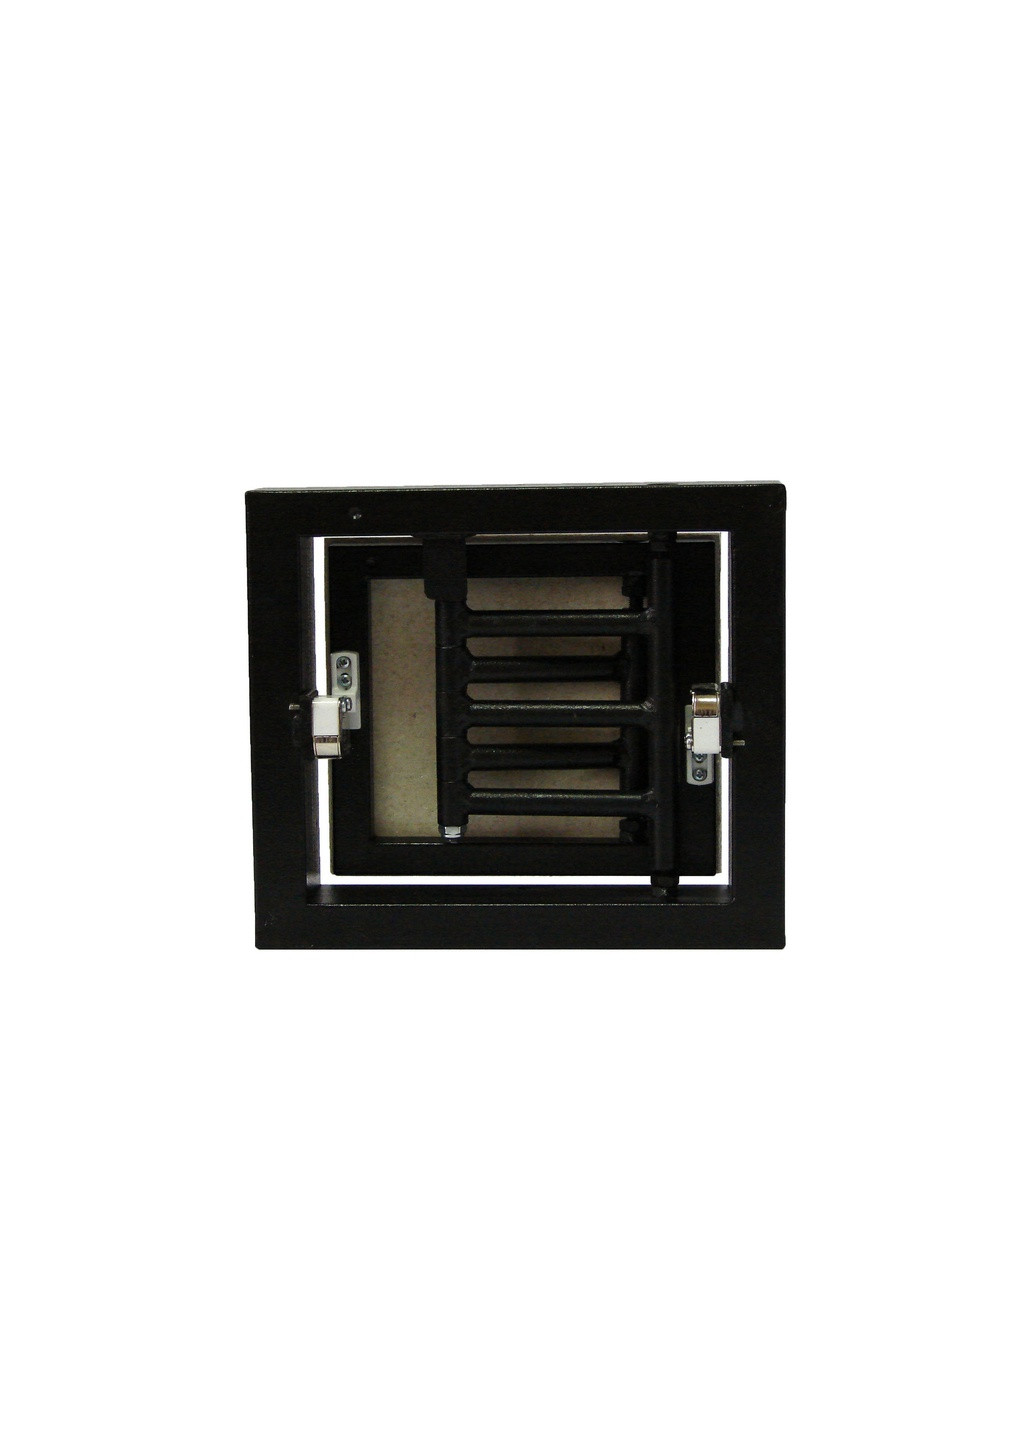 Ревизионный люк скрытого монтажа под плитку нажимного типа 250x200 ревизионная дверца для плитки (1123) S-Dom (264208727)